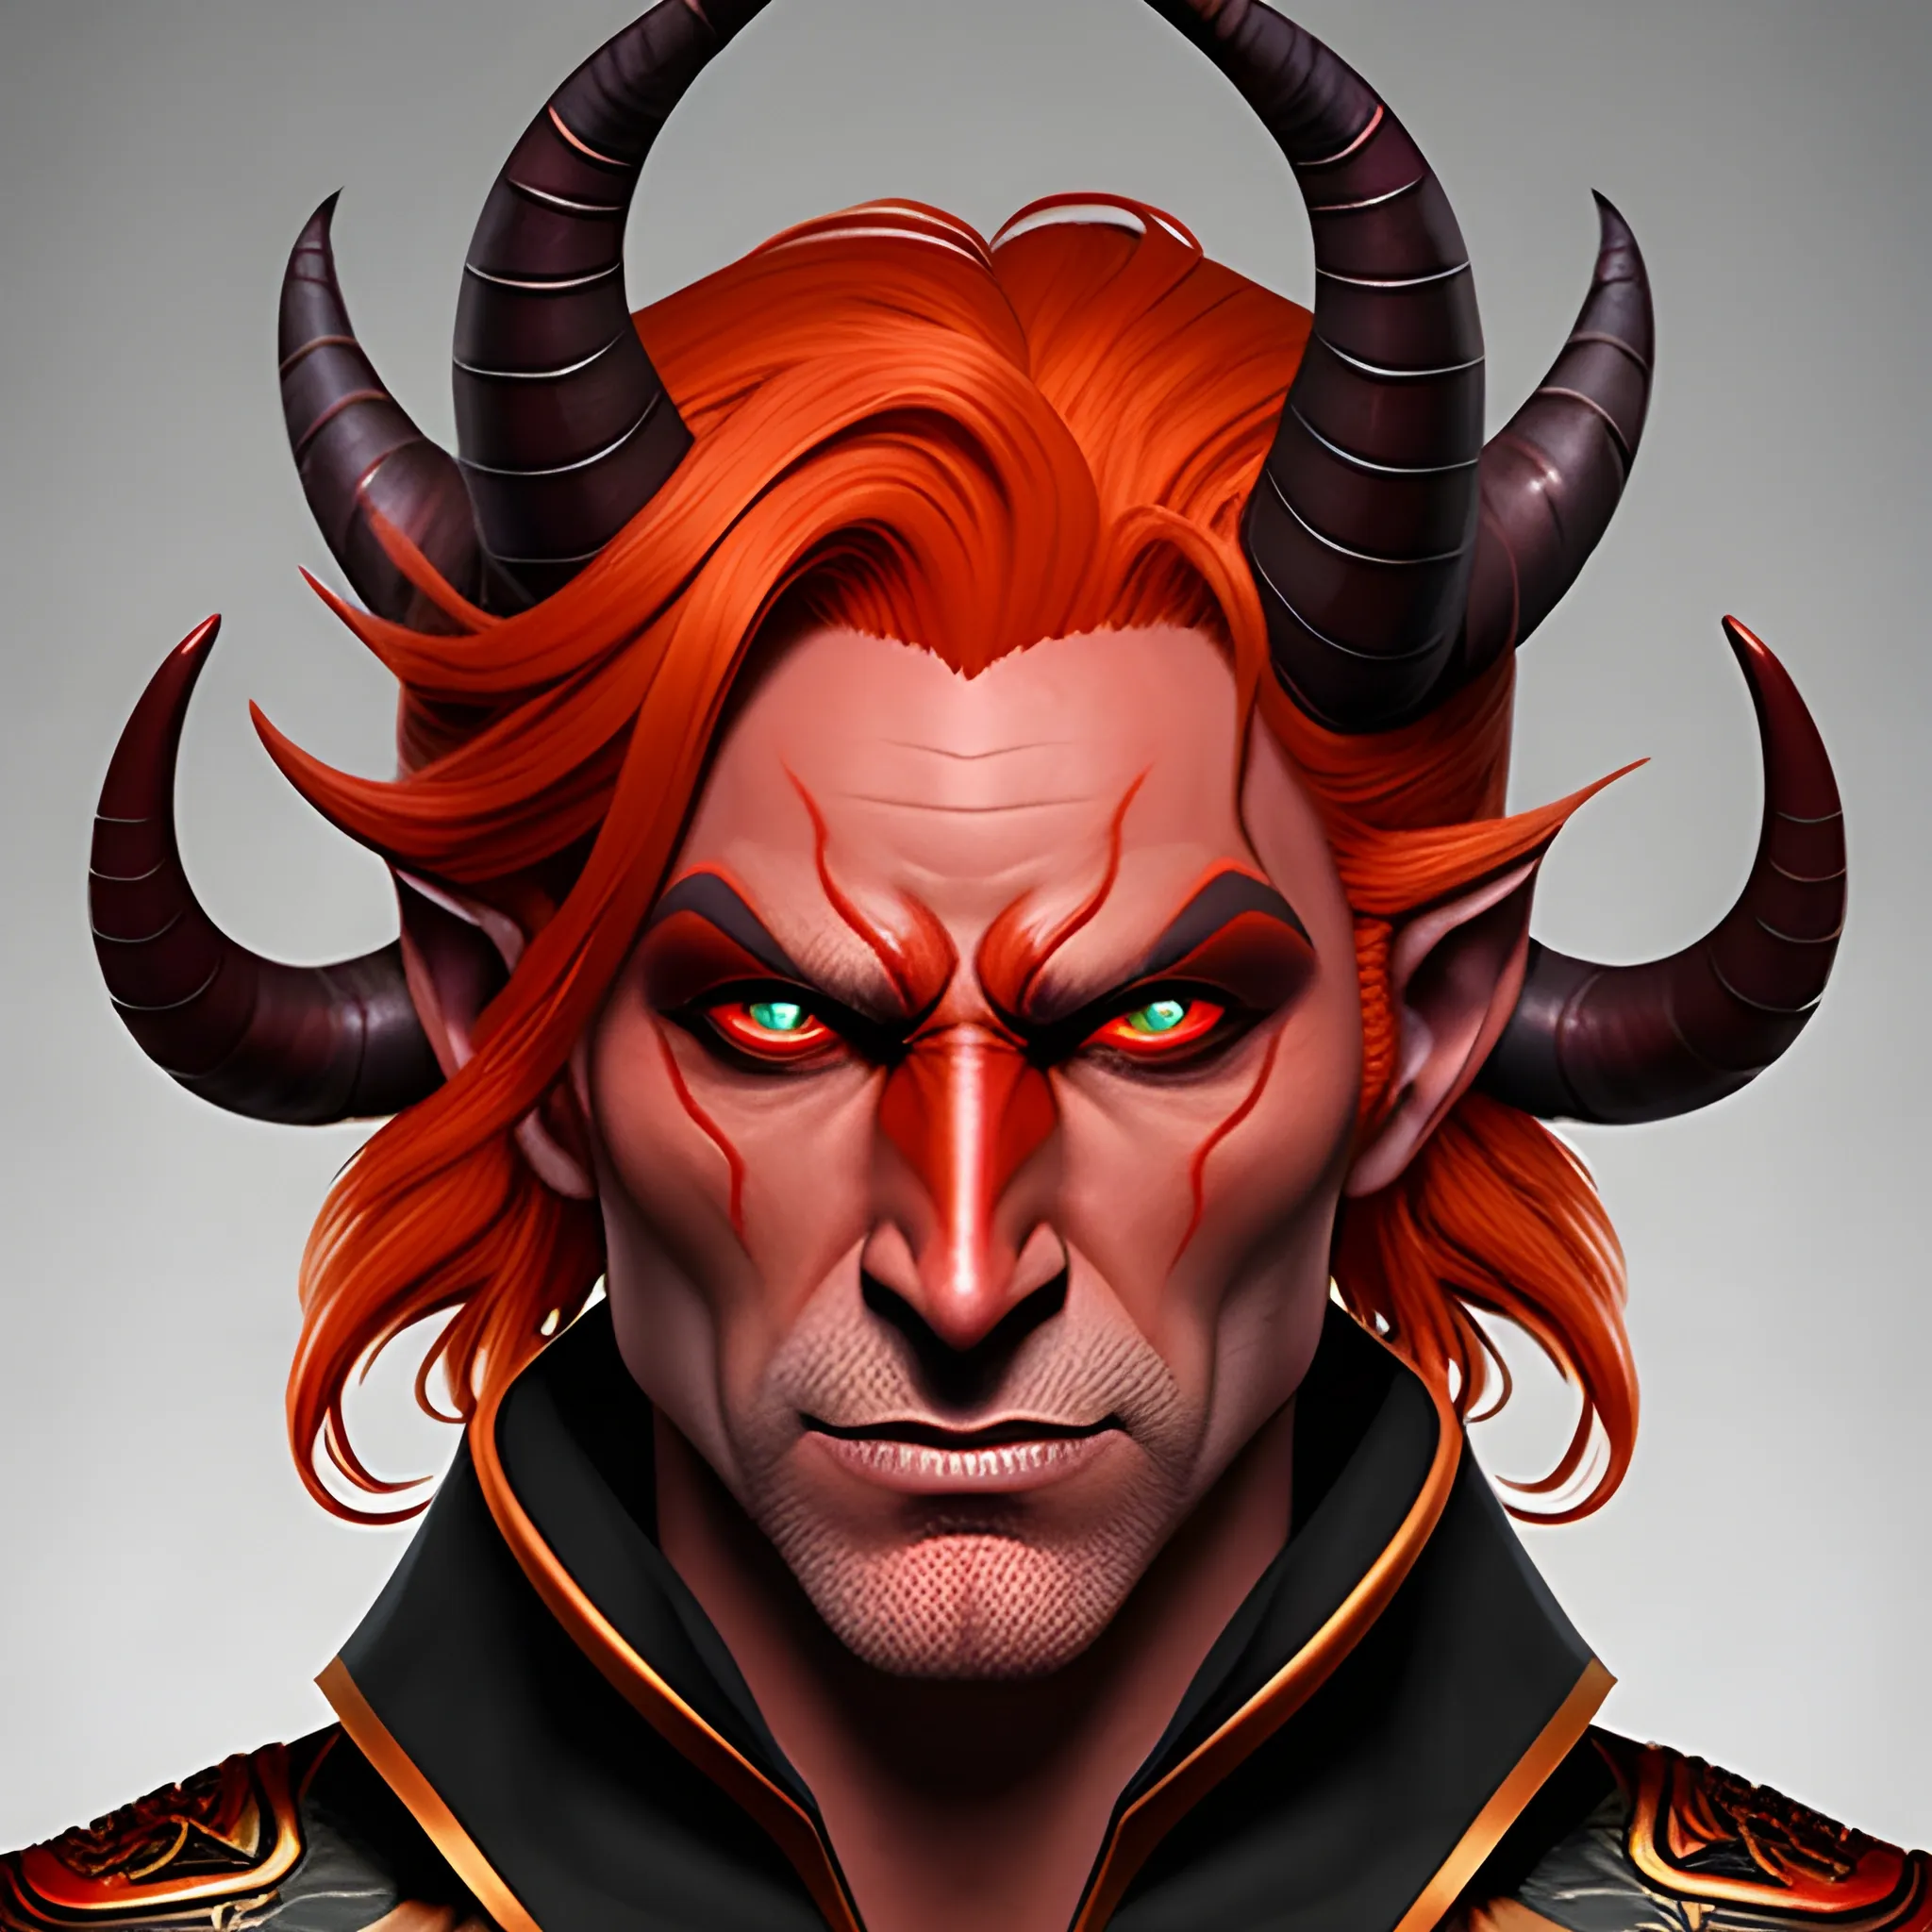 tiefling man, small horns, orange hair, red skin